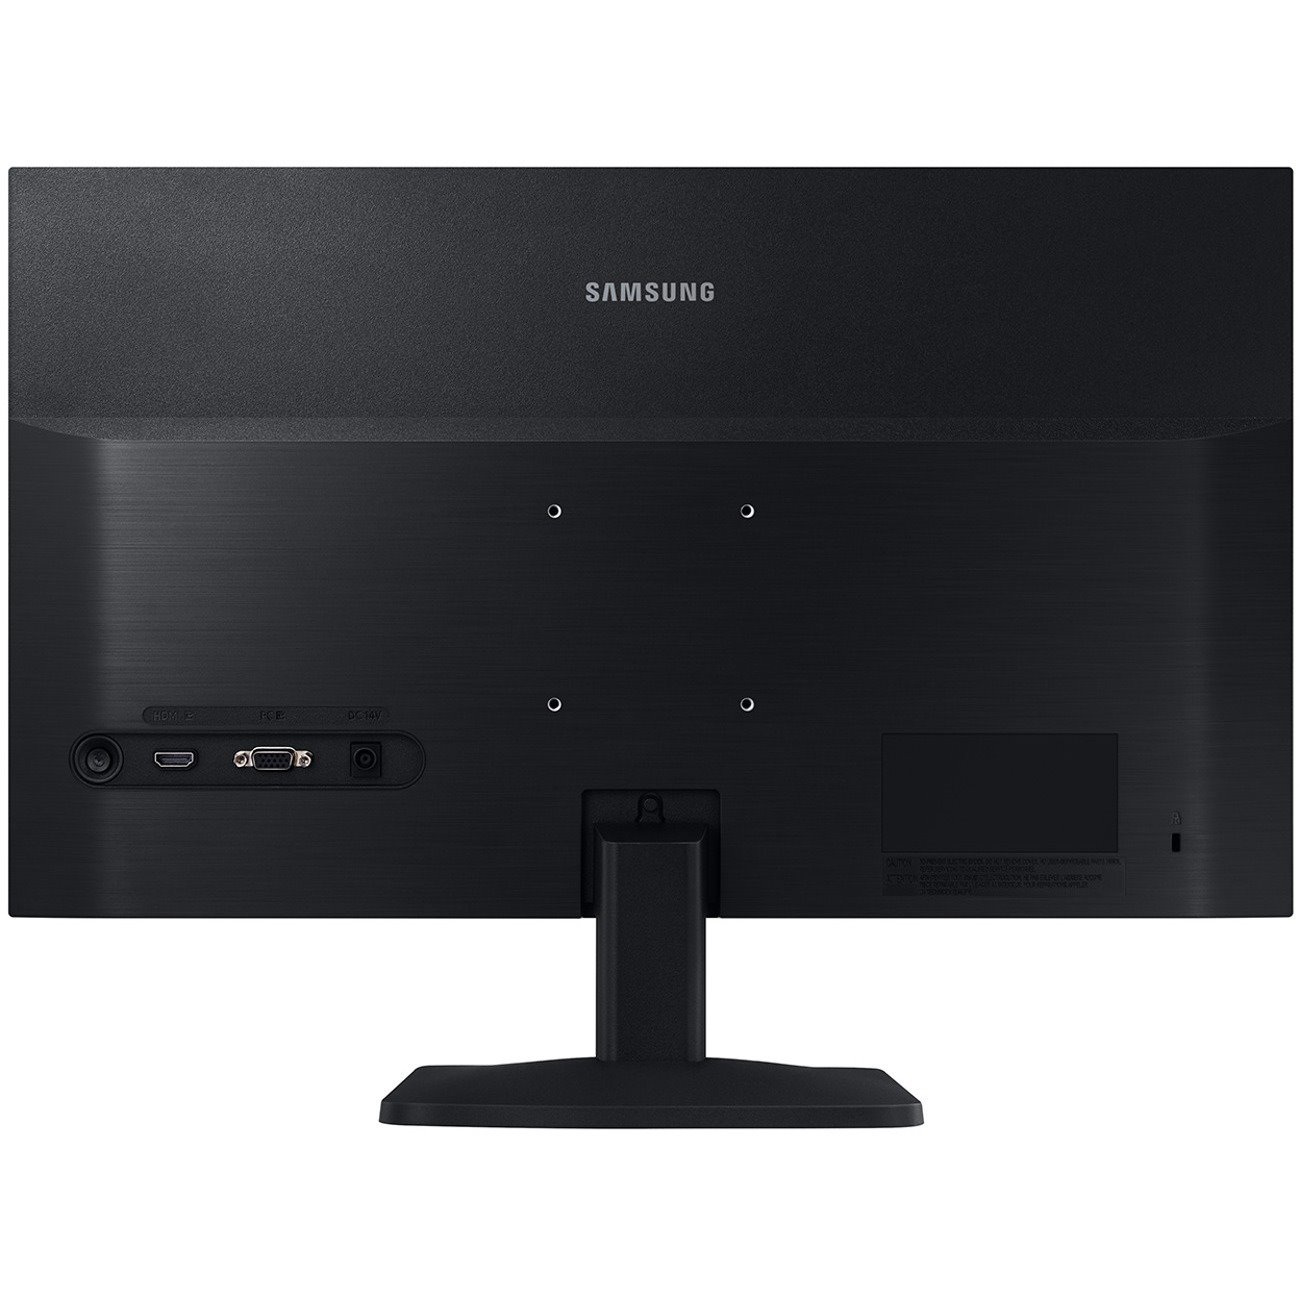 Samsung Essential S22A338NHN 22" Class Full HD LCD Monitor - 16:9 - Black